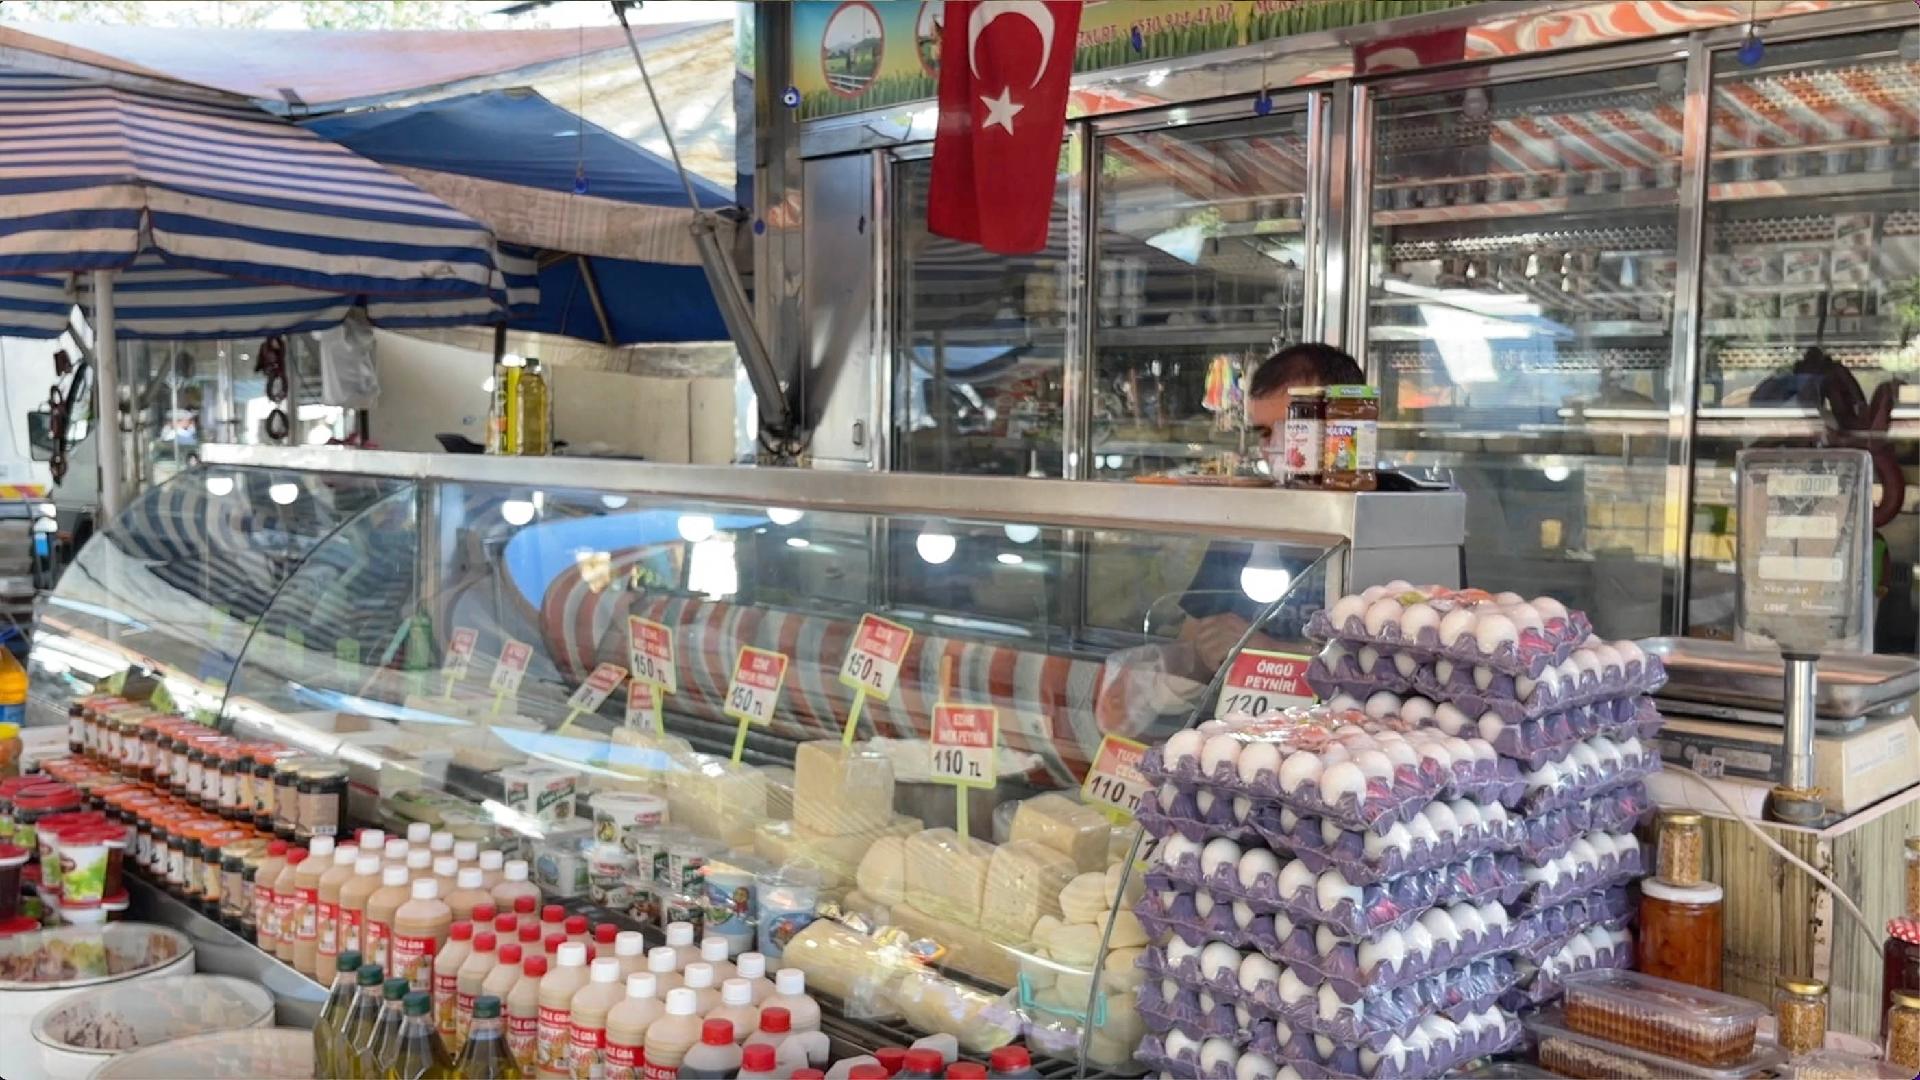 Türkiye’s annual inflation reaches highest level in 24 years